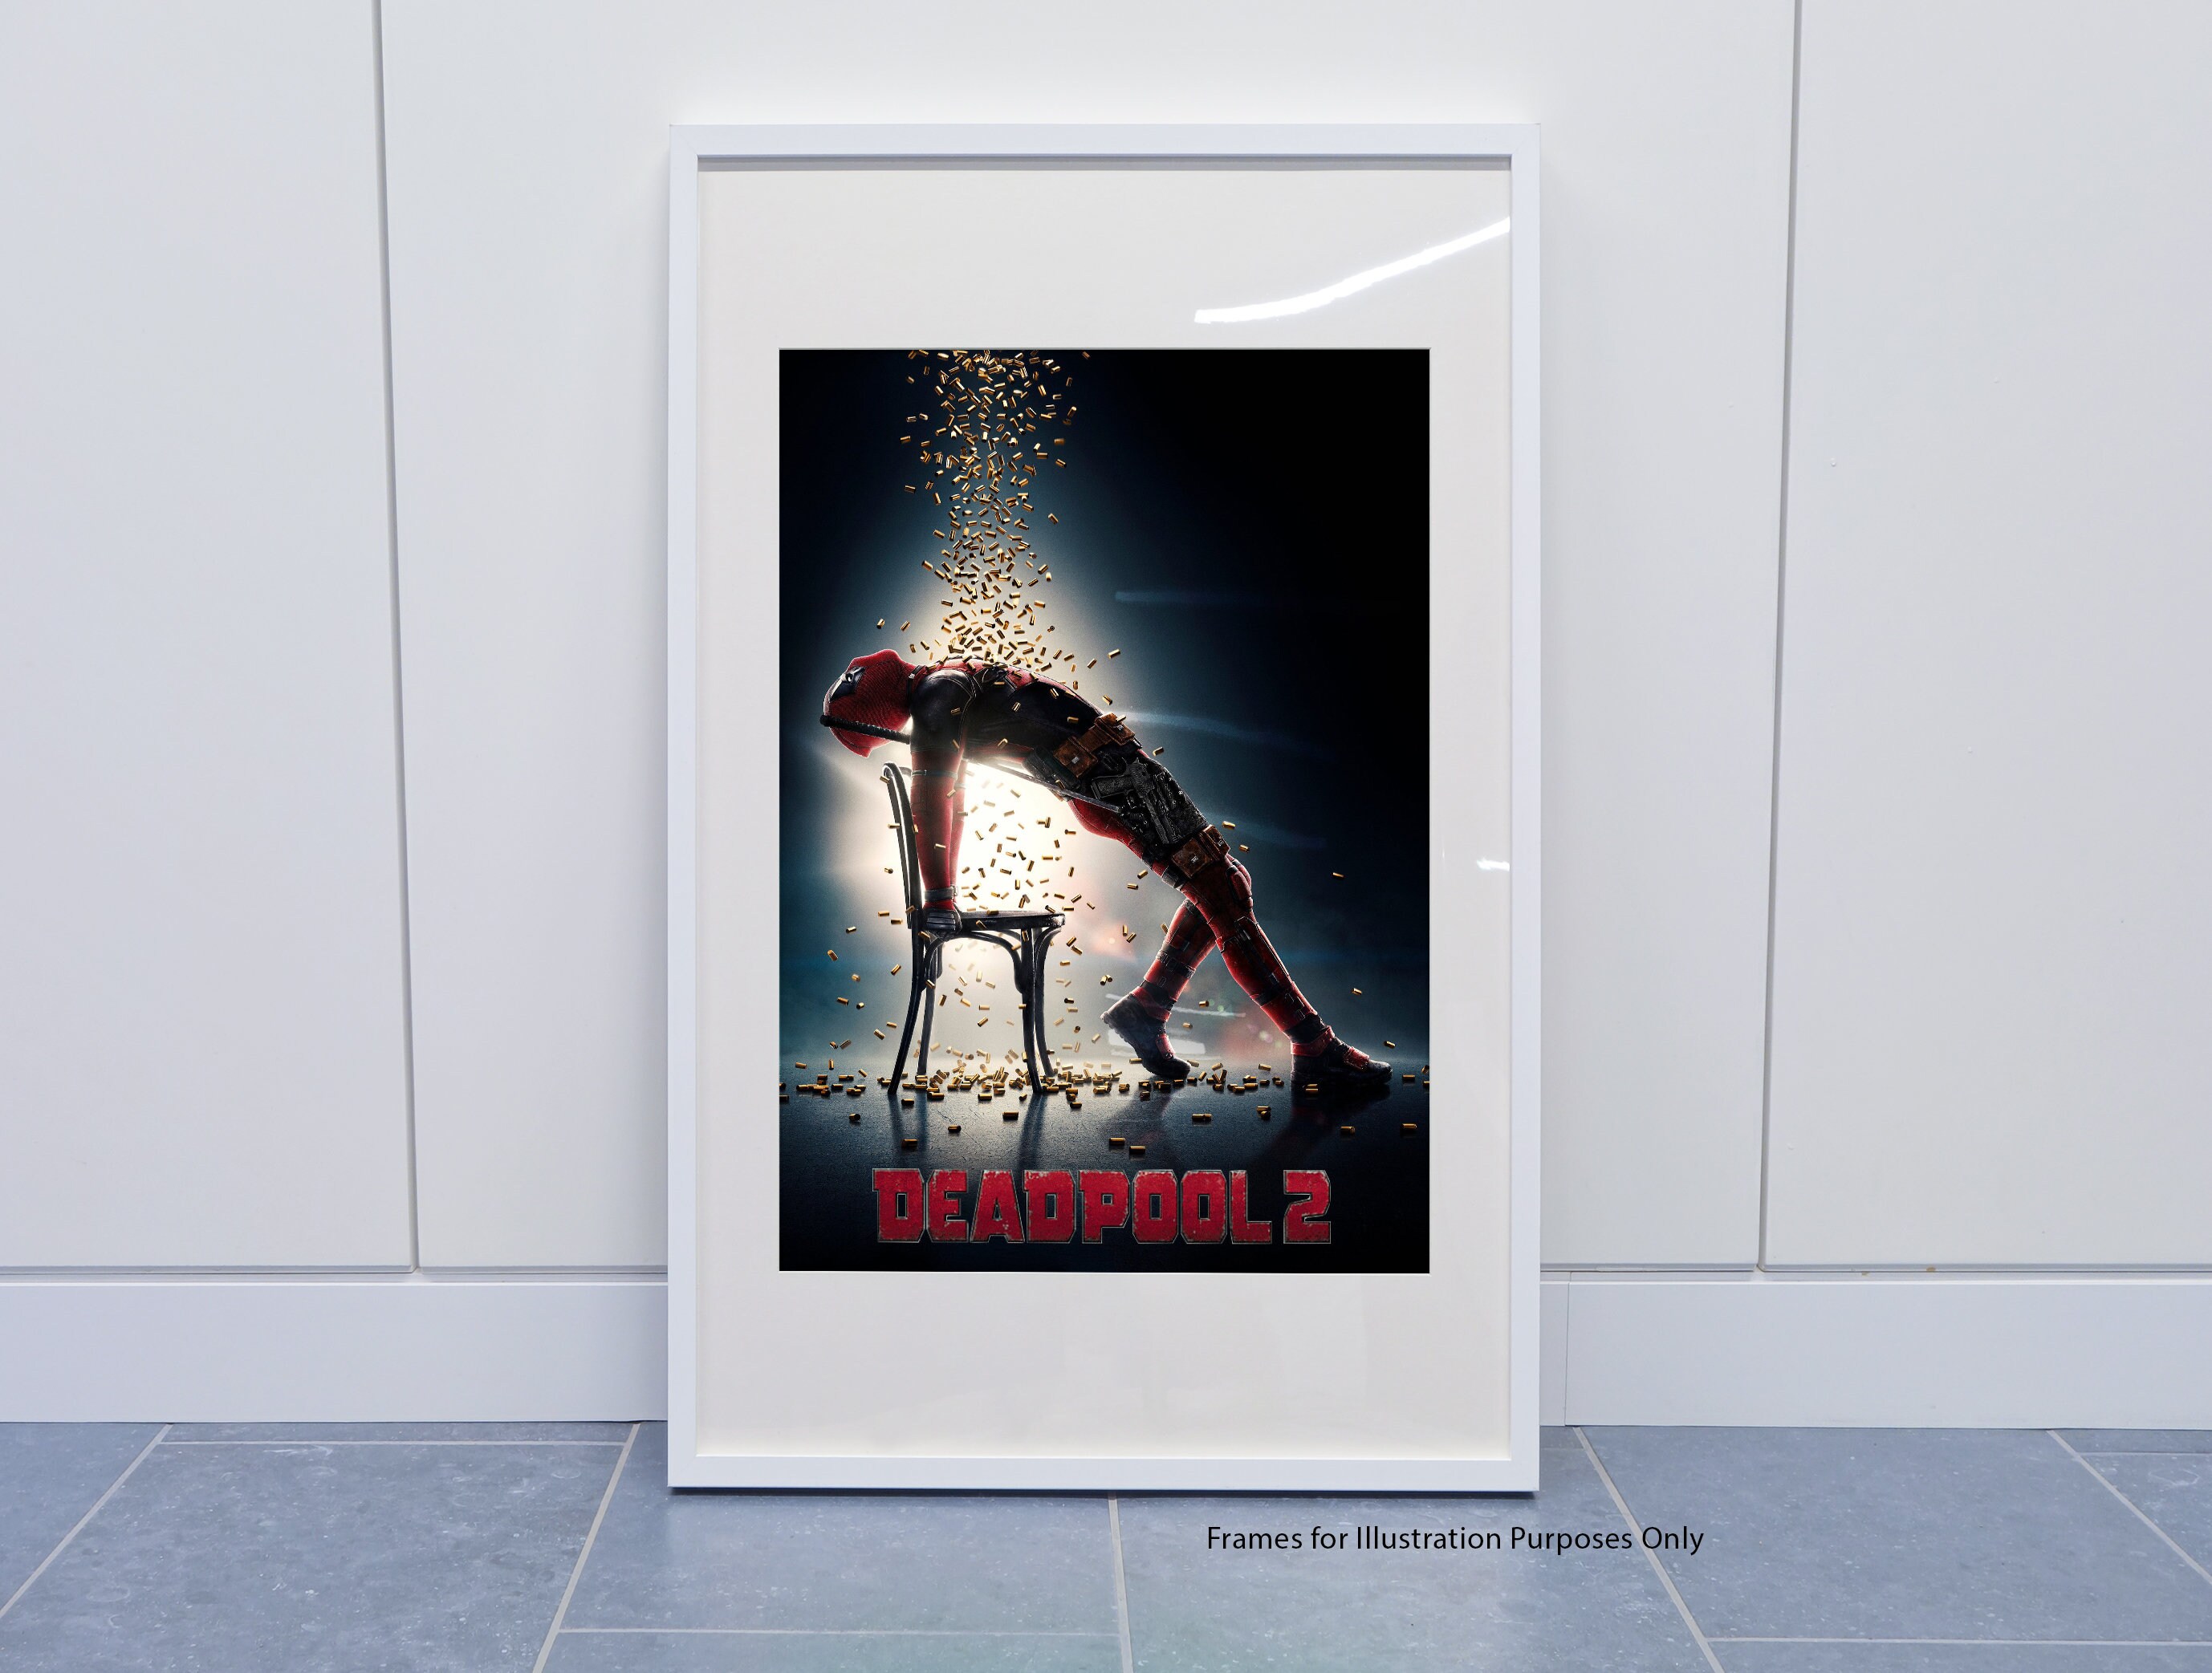 BFHDESIGN 🏴‍☠️ on X: Deadpool 3 poster made by me #Deadpool3  #MarvelStudios @robertliefeld @MarvelStudios  / X